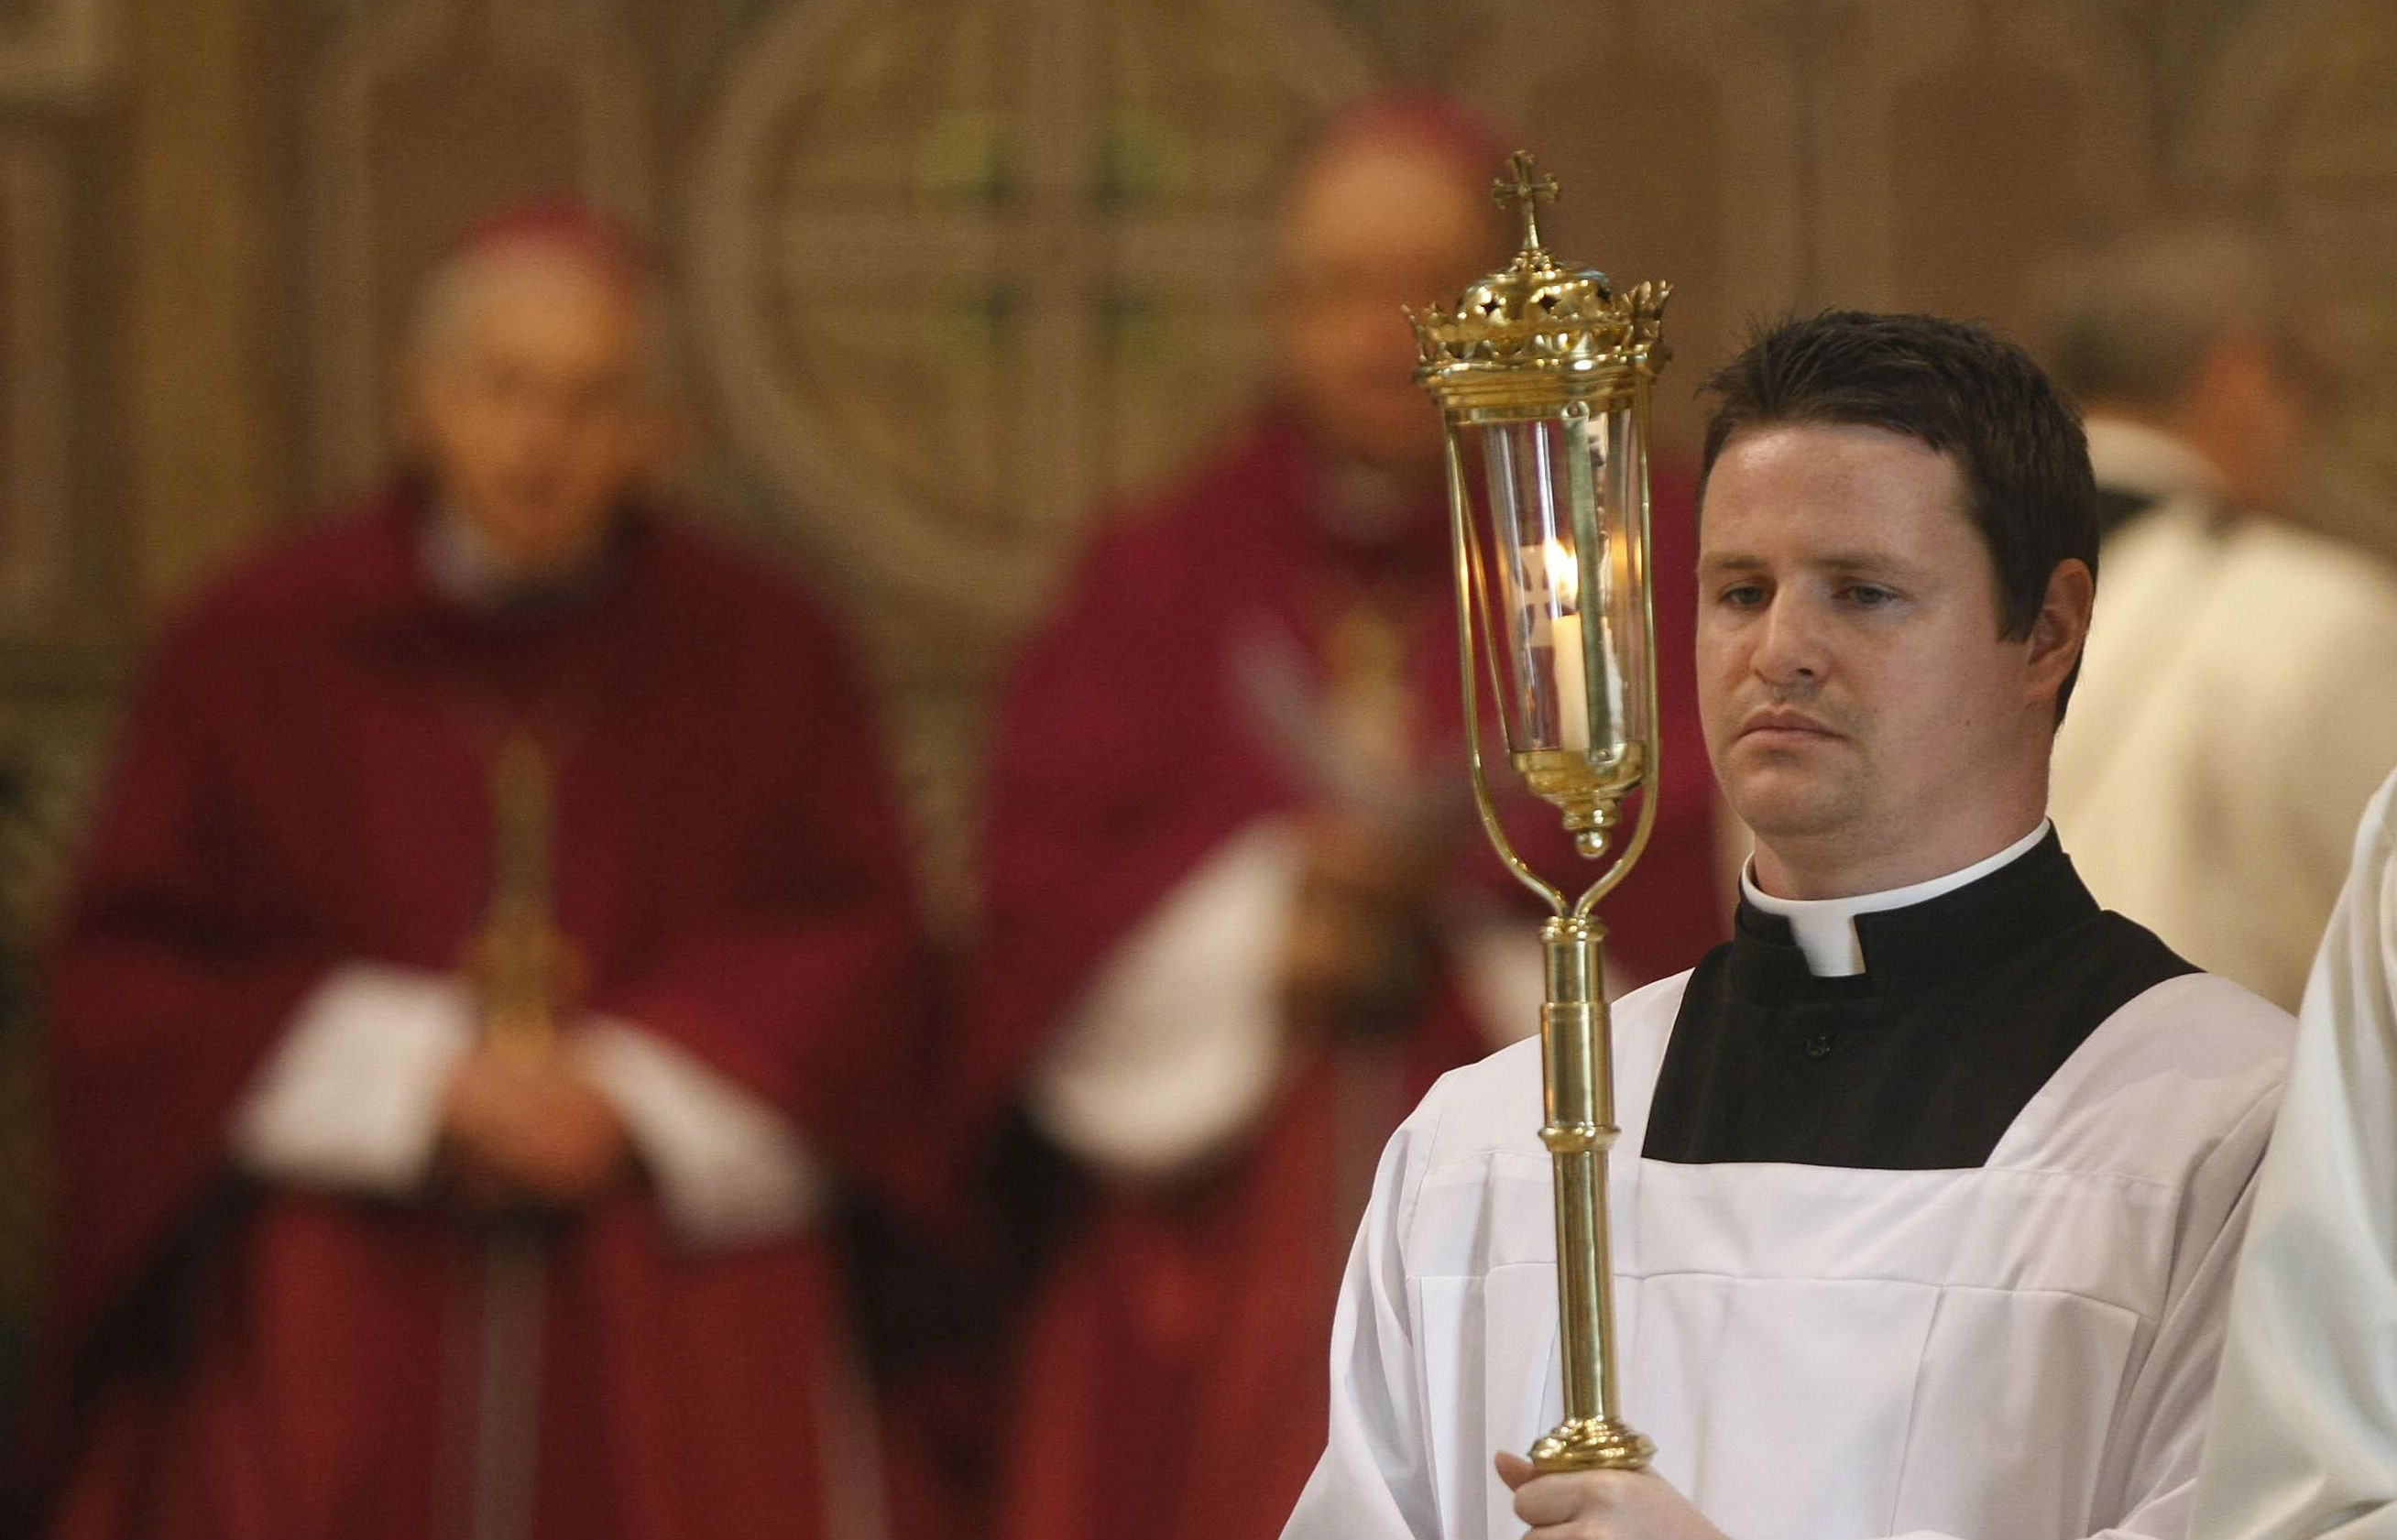 Former international footballer takes next step to become Catholic priest